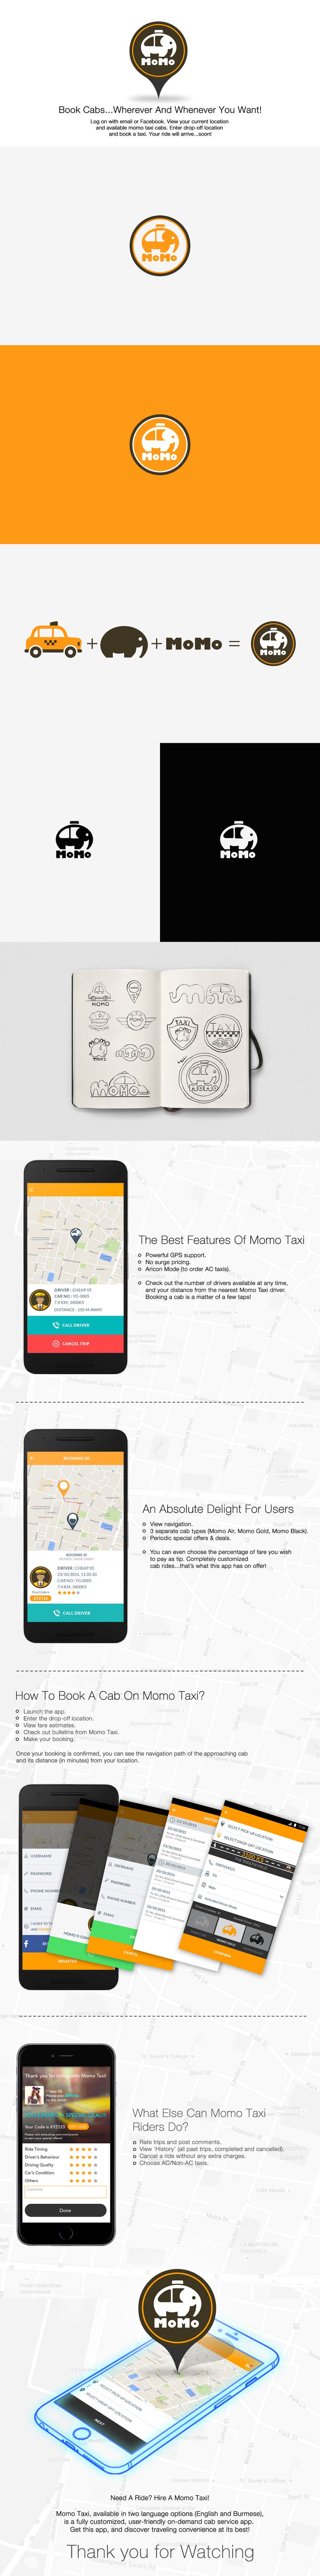 Momo Taxi - An app for taxi marketplace